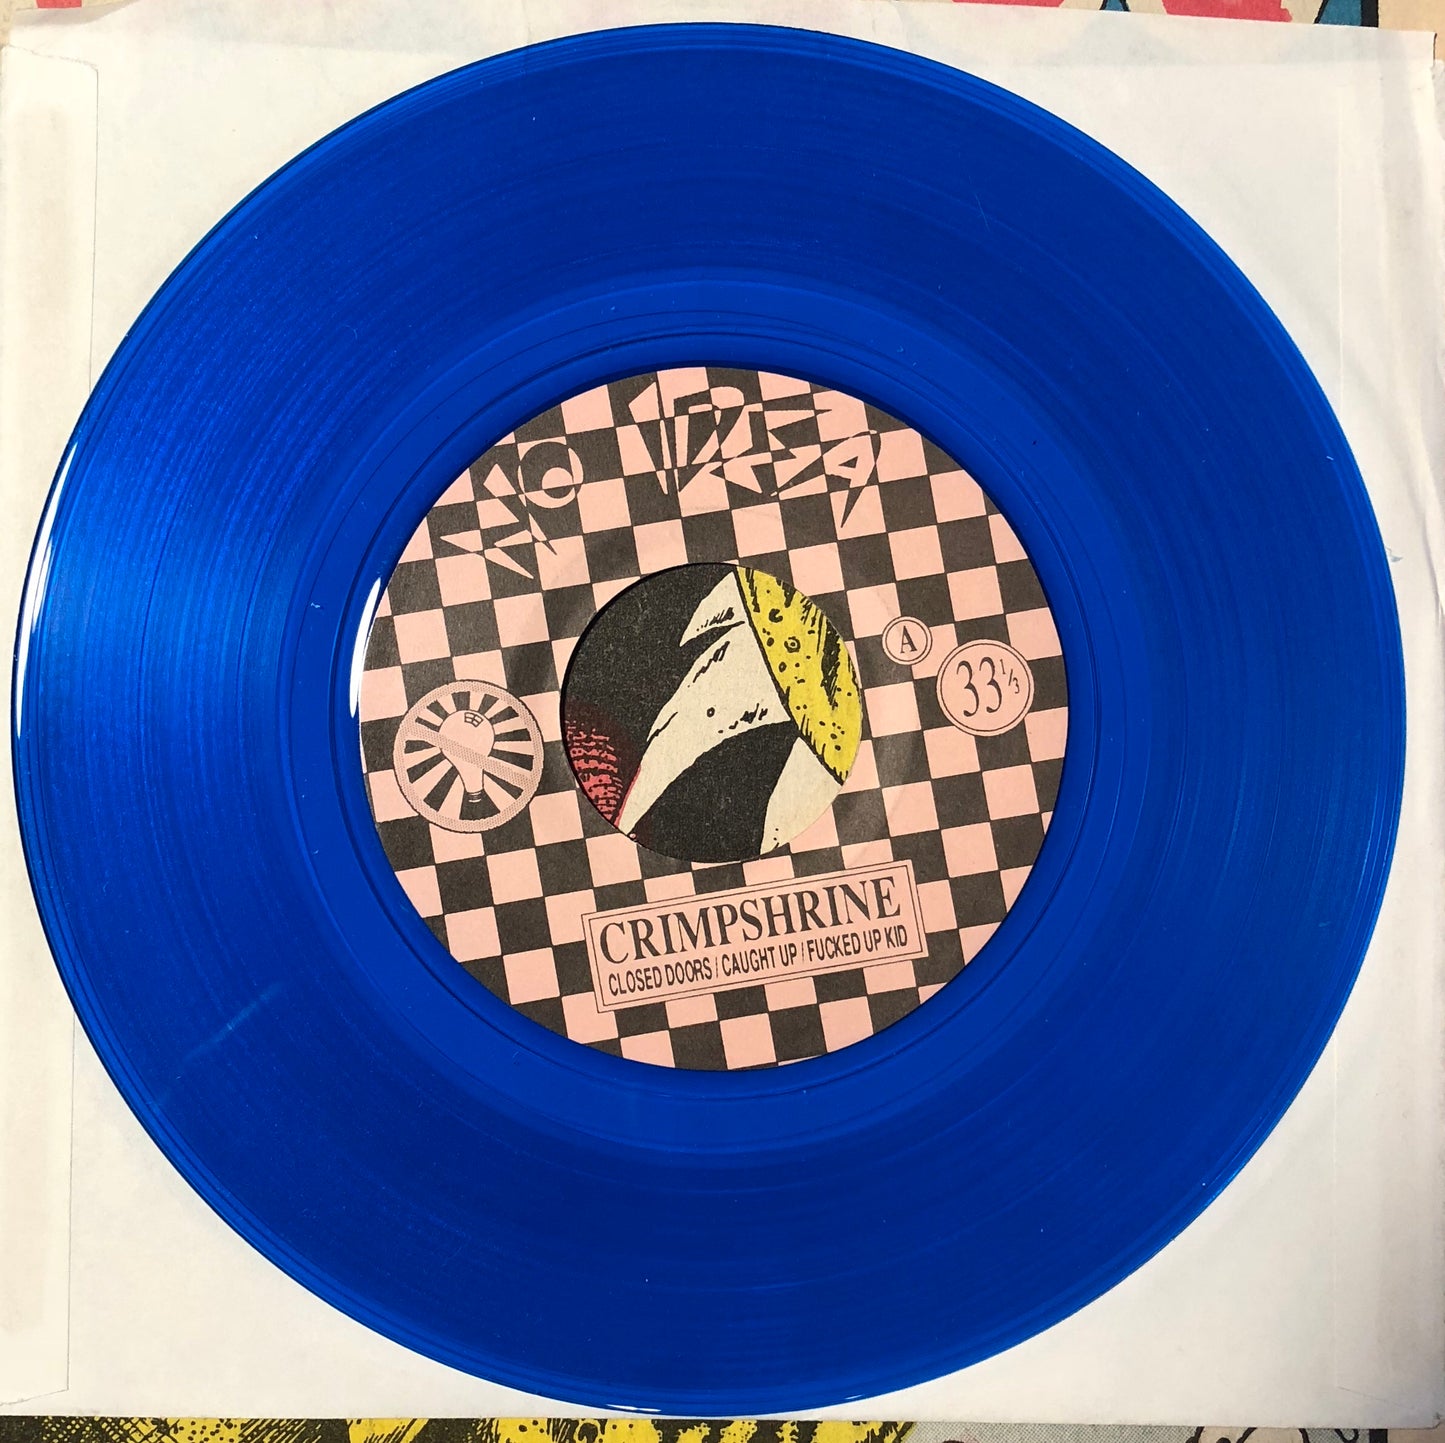 NO IDEA FANZINE #7 with CRIMPSHRINE/MUTLEY CHIX record inside (COLORED VINYL)